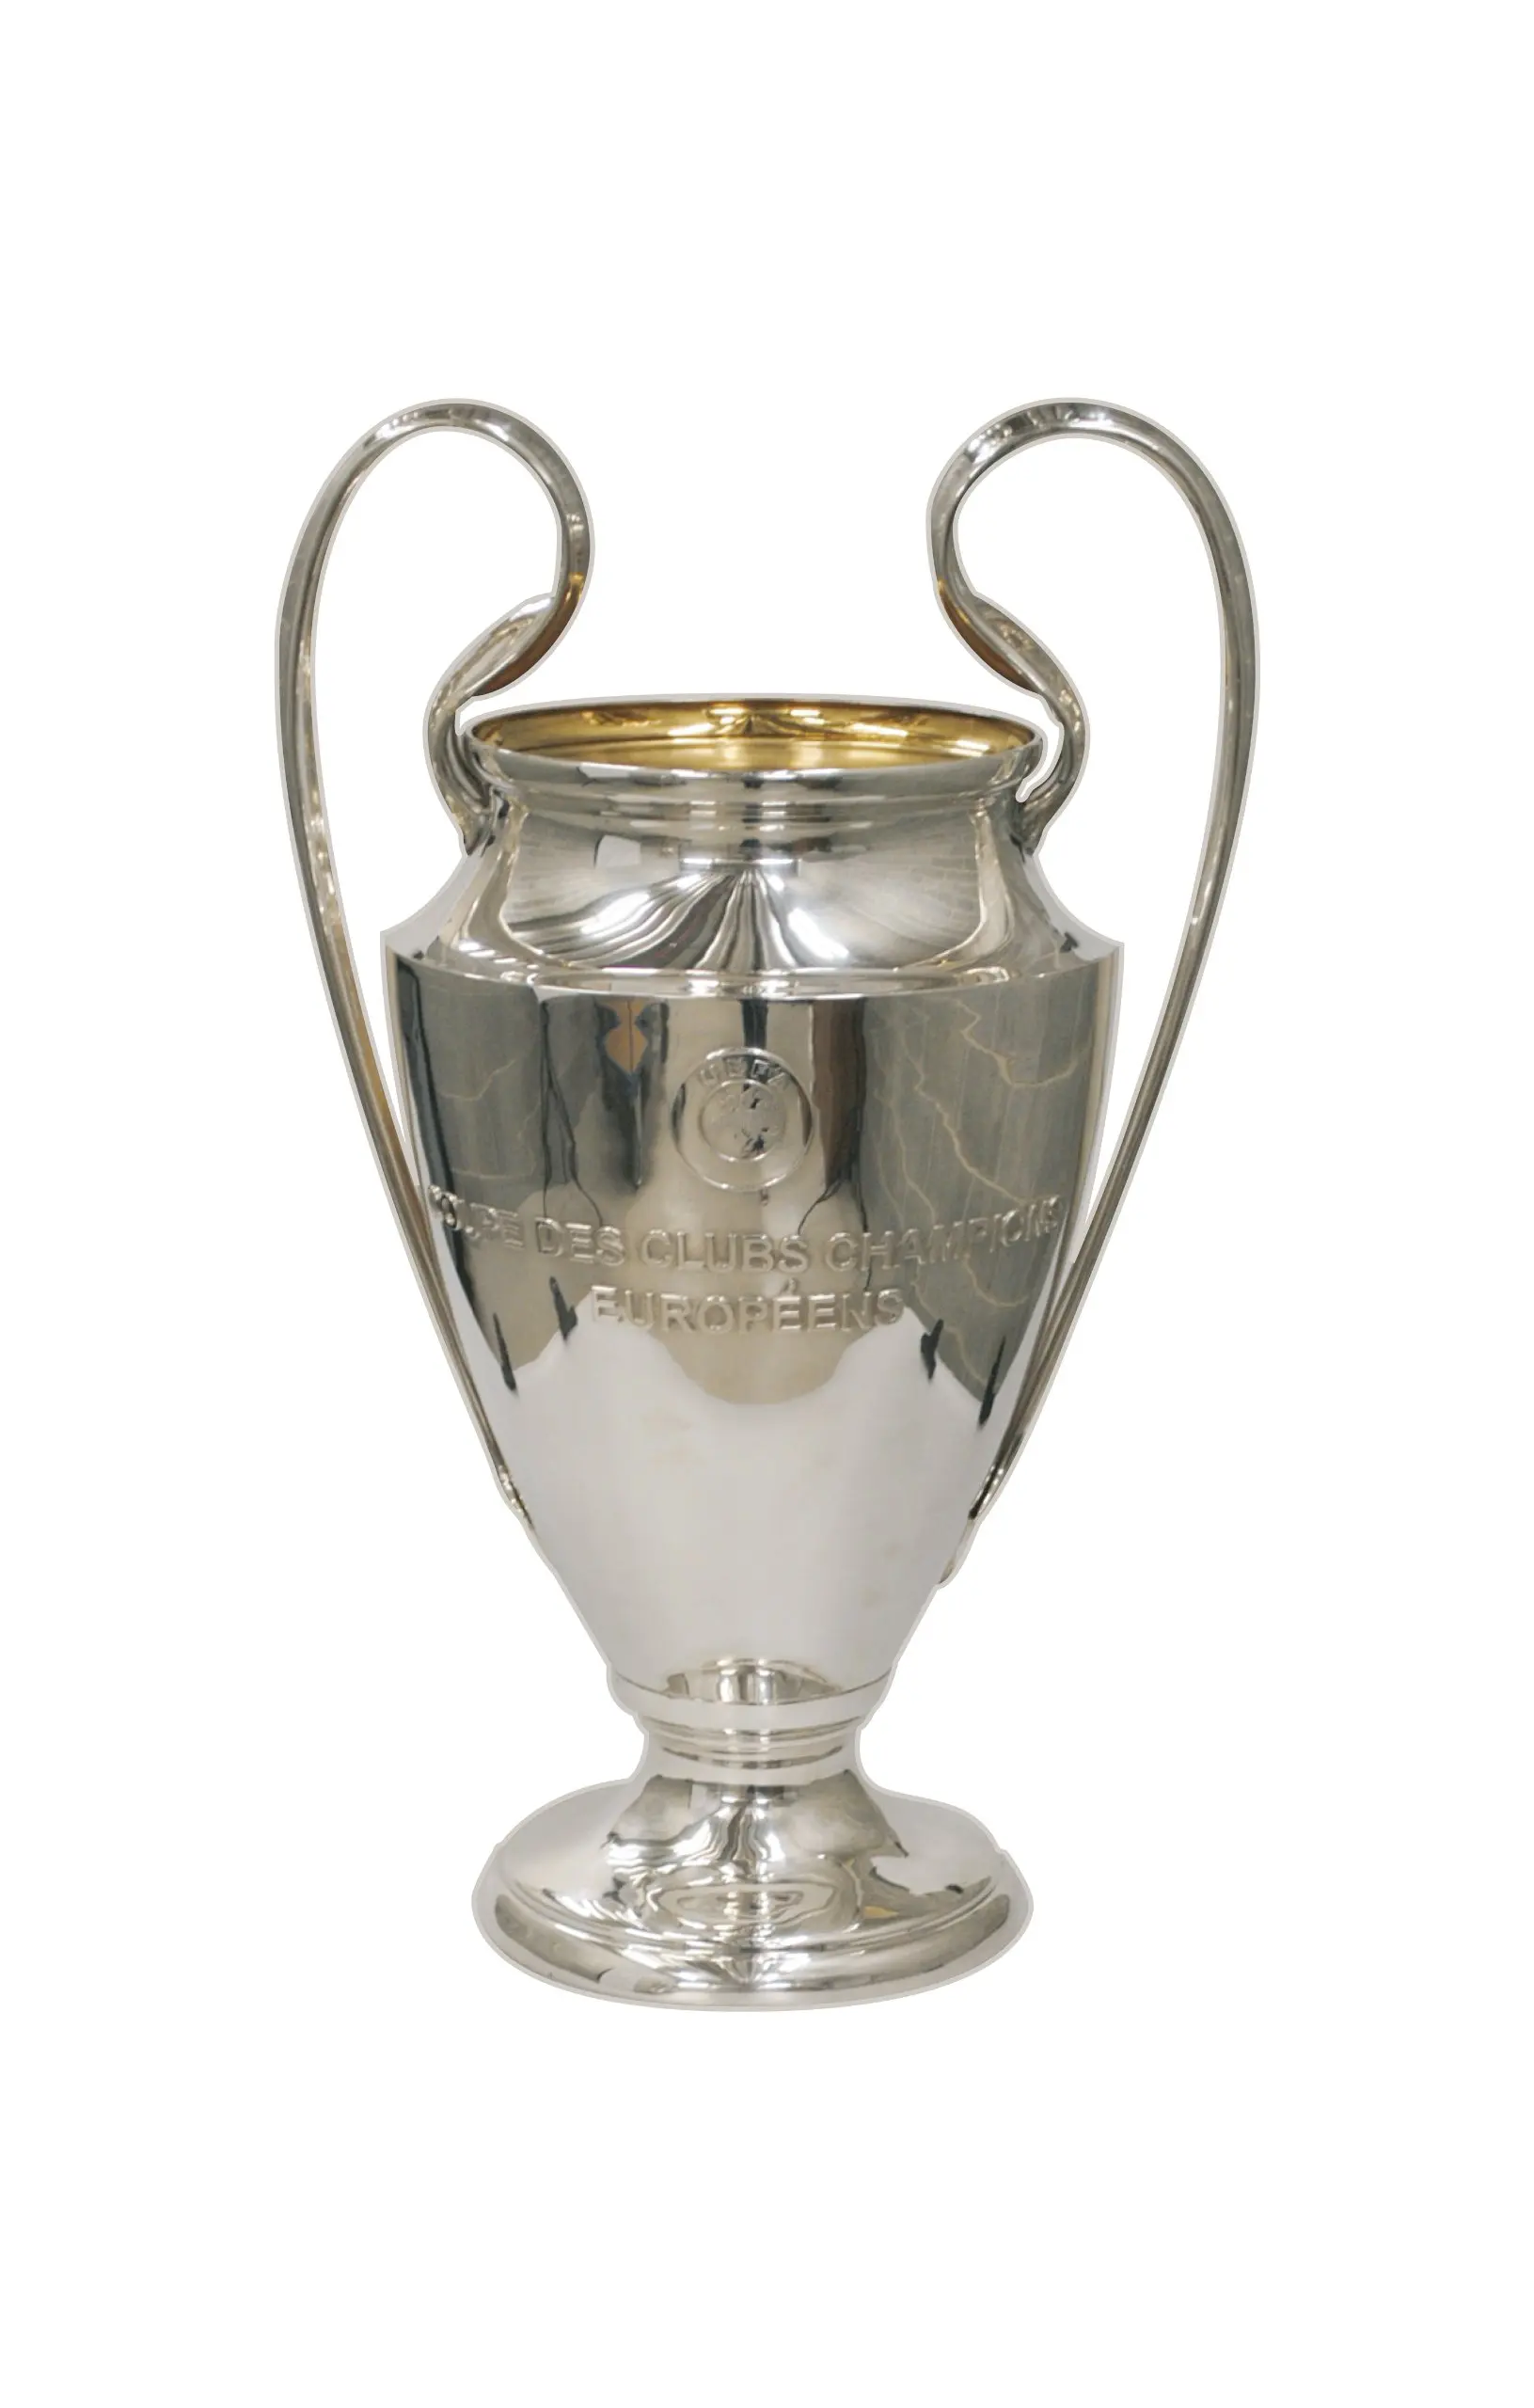 Cheap Champions League Trophy Replica, find Champions League Trophy